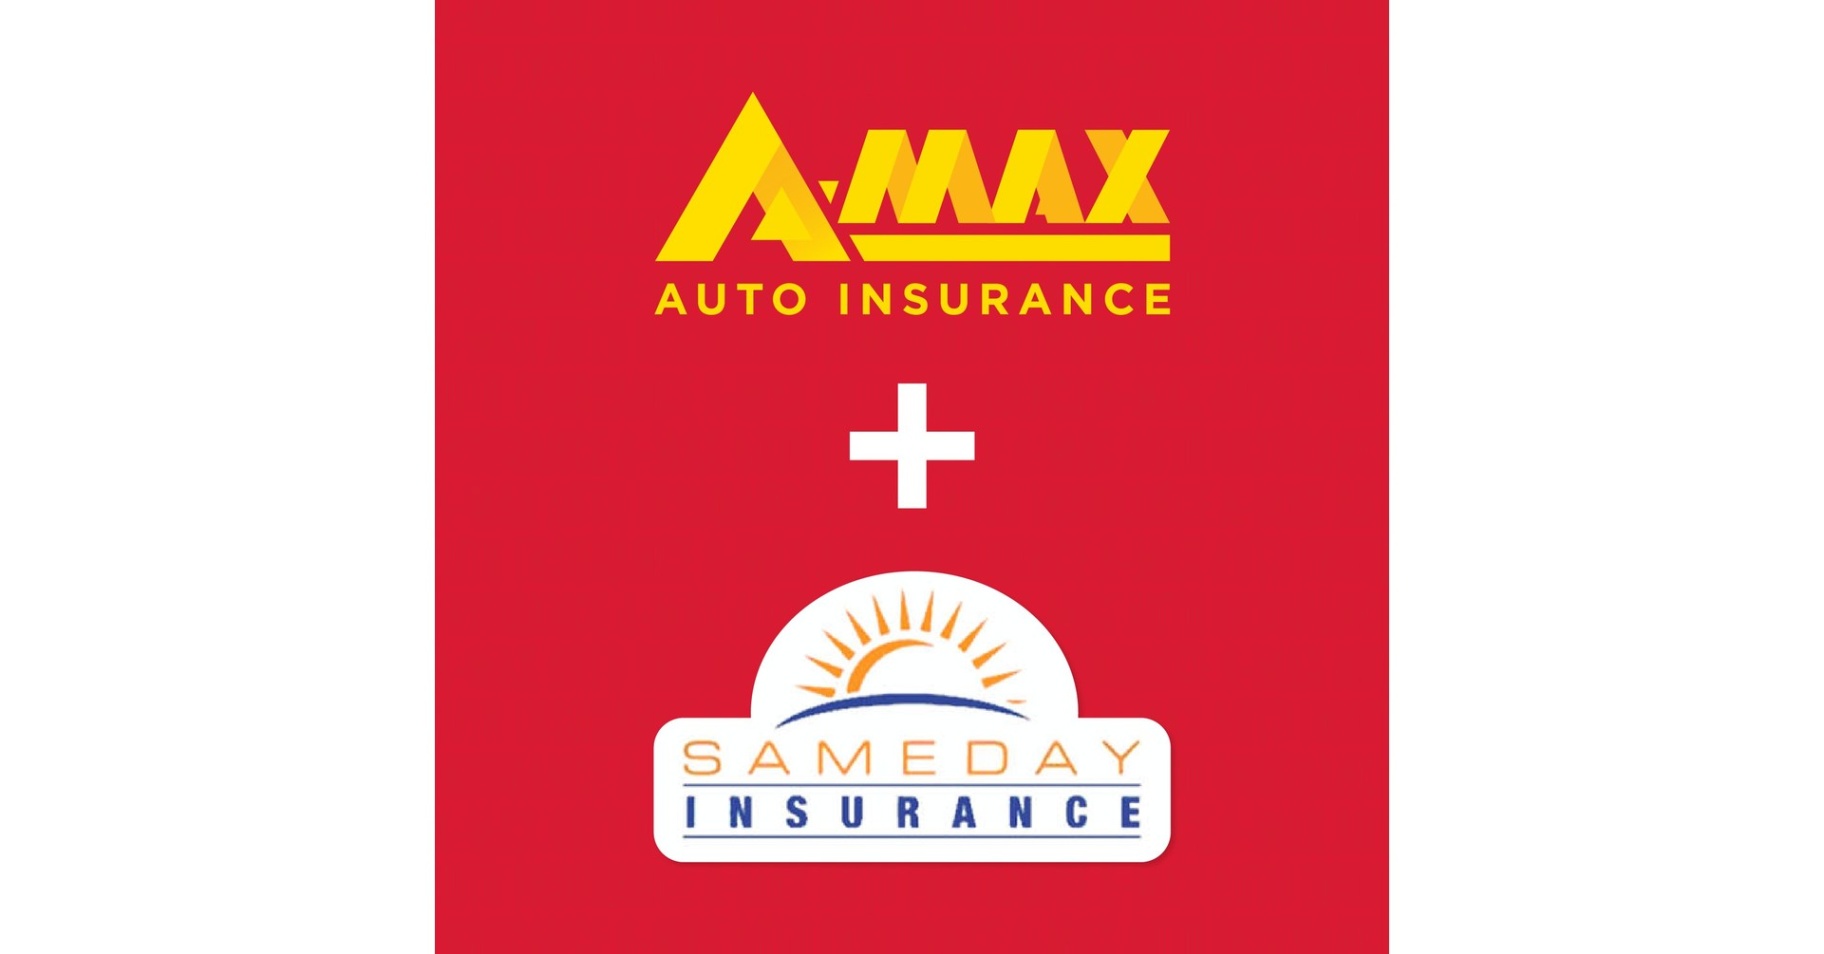 max auto insurance Bulan 2 A-MAX Auto Insurance Expands into California, Acquires Sameday